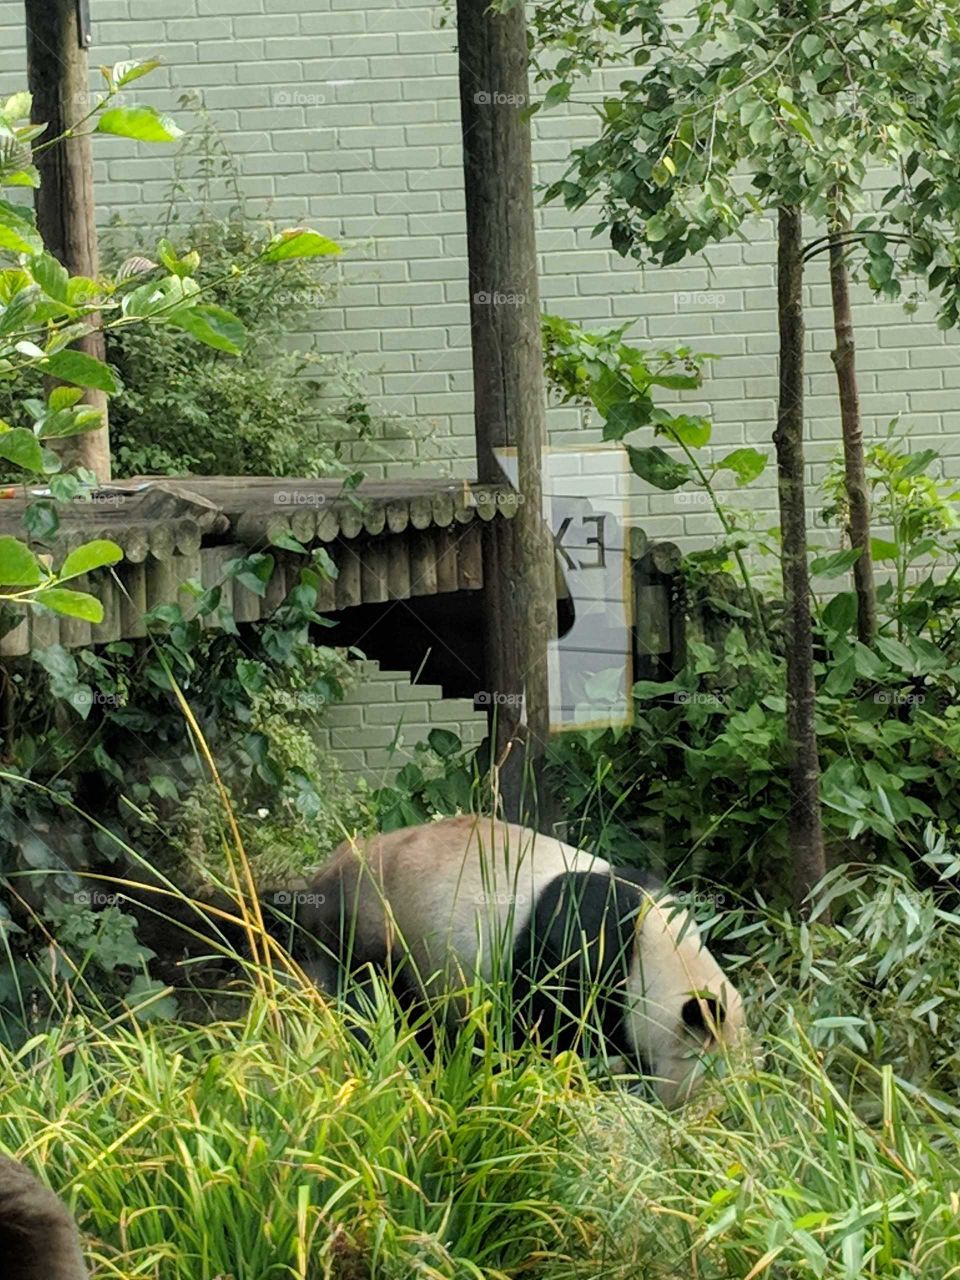 Giant Panda in Edinburgh Zoo